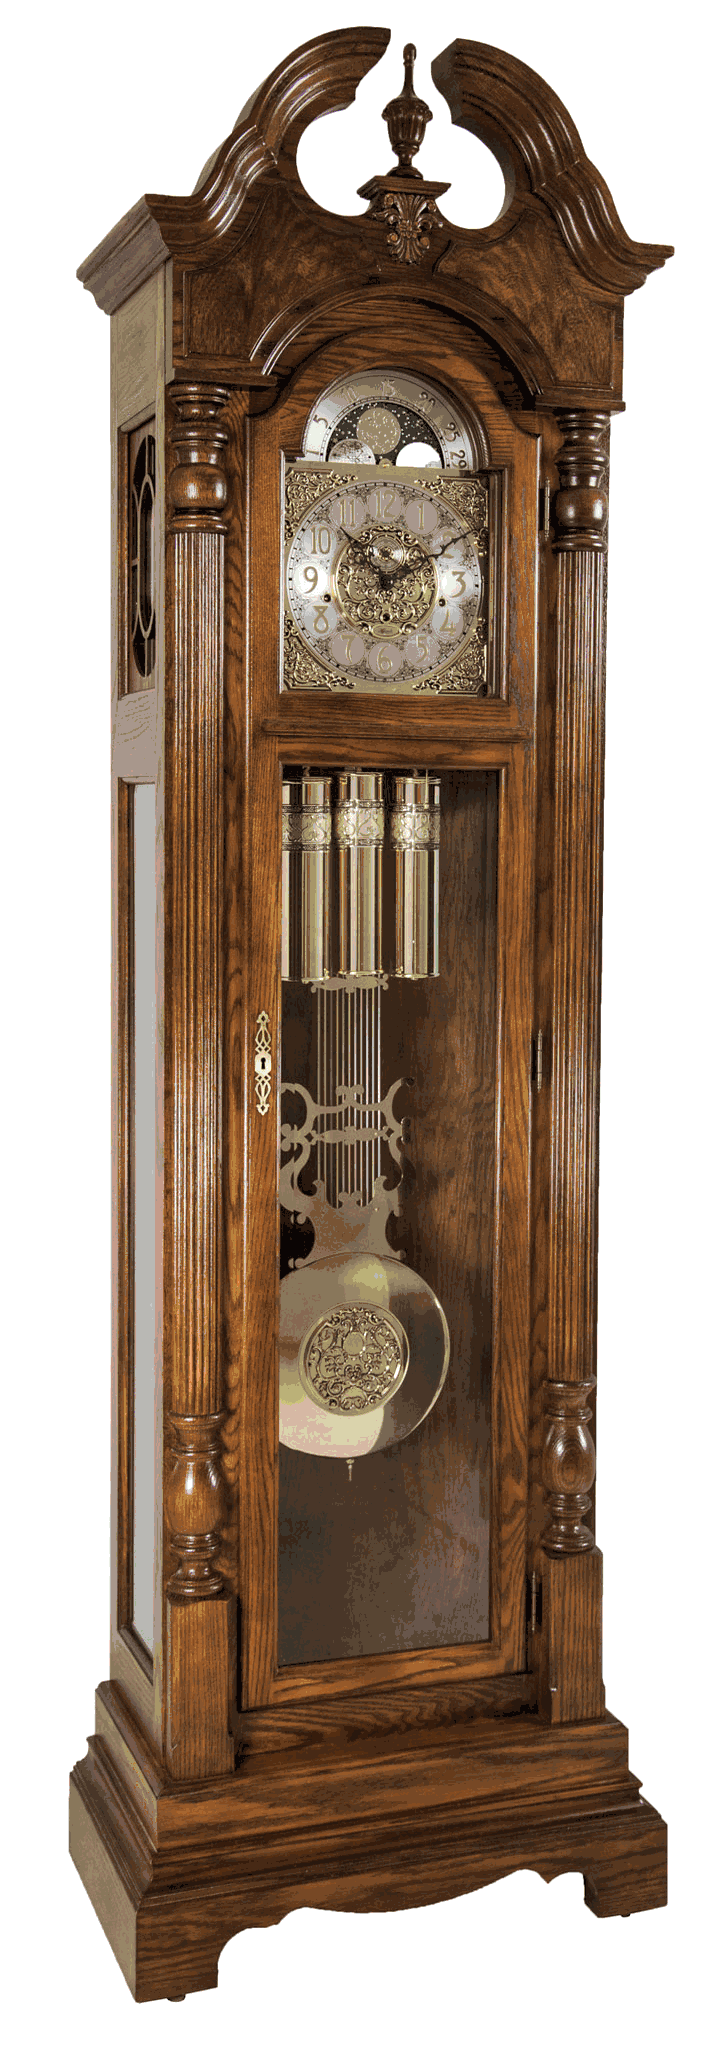 Blakely Grandfather Clock by Hermle Clocks - Dark Oak